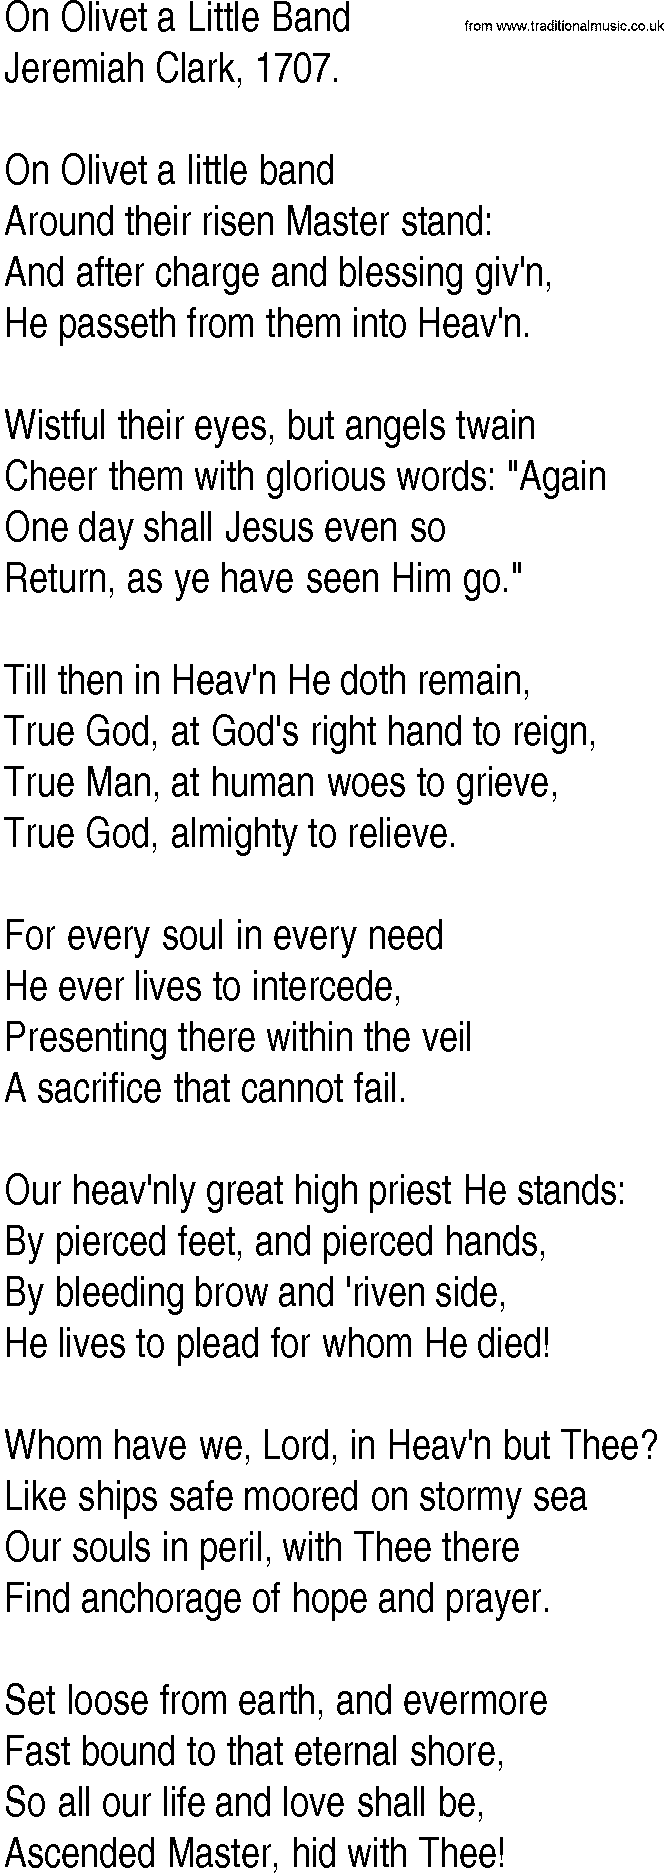 Hymn and Gospel Song: On Olivet a Little Band by Jeremiah Clark lyrics